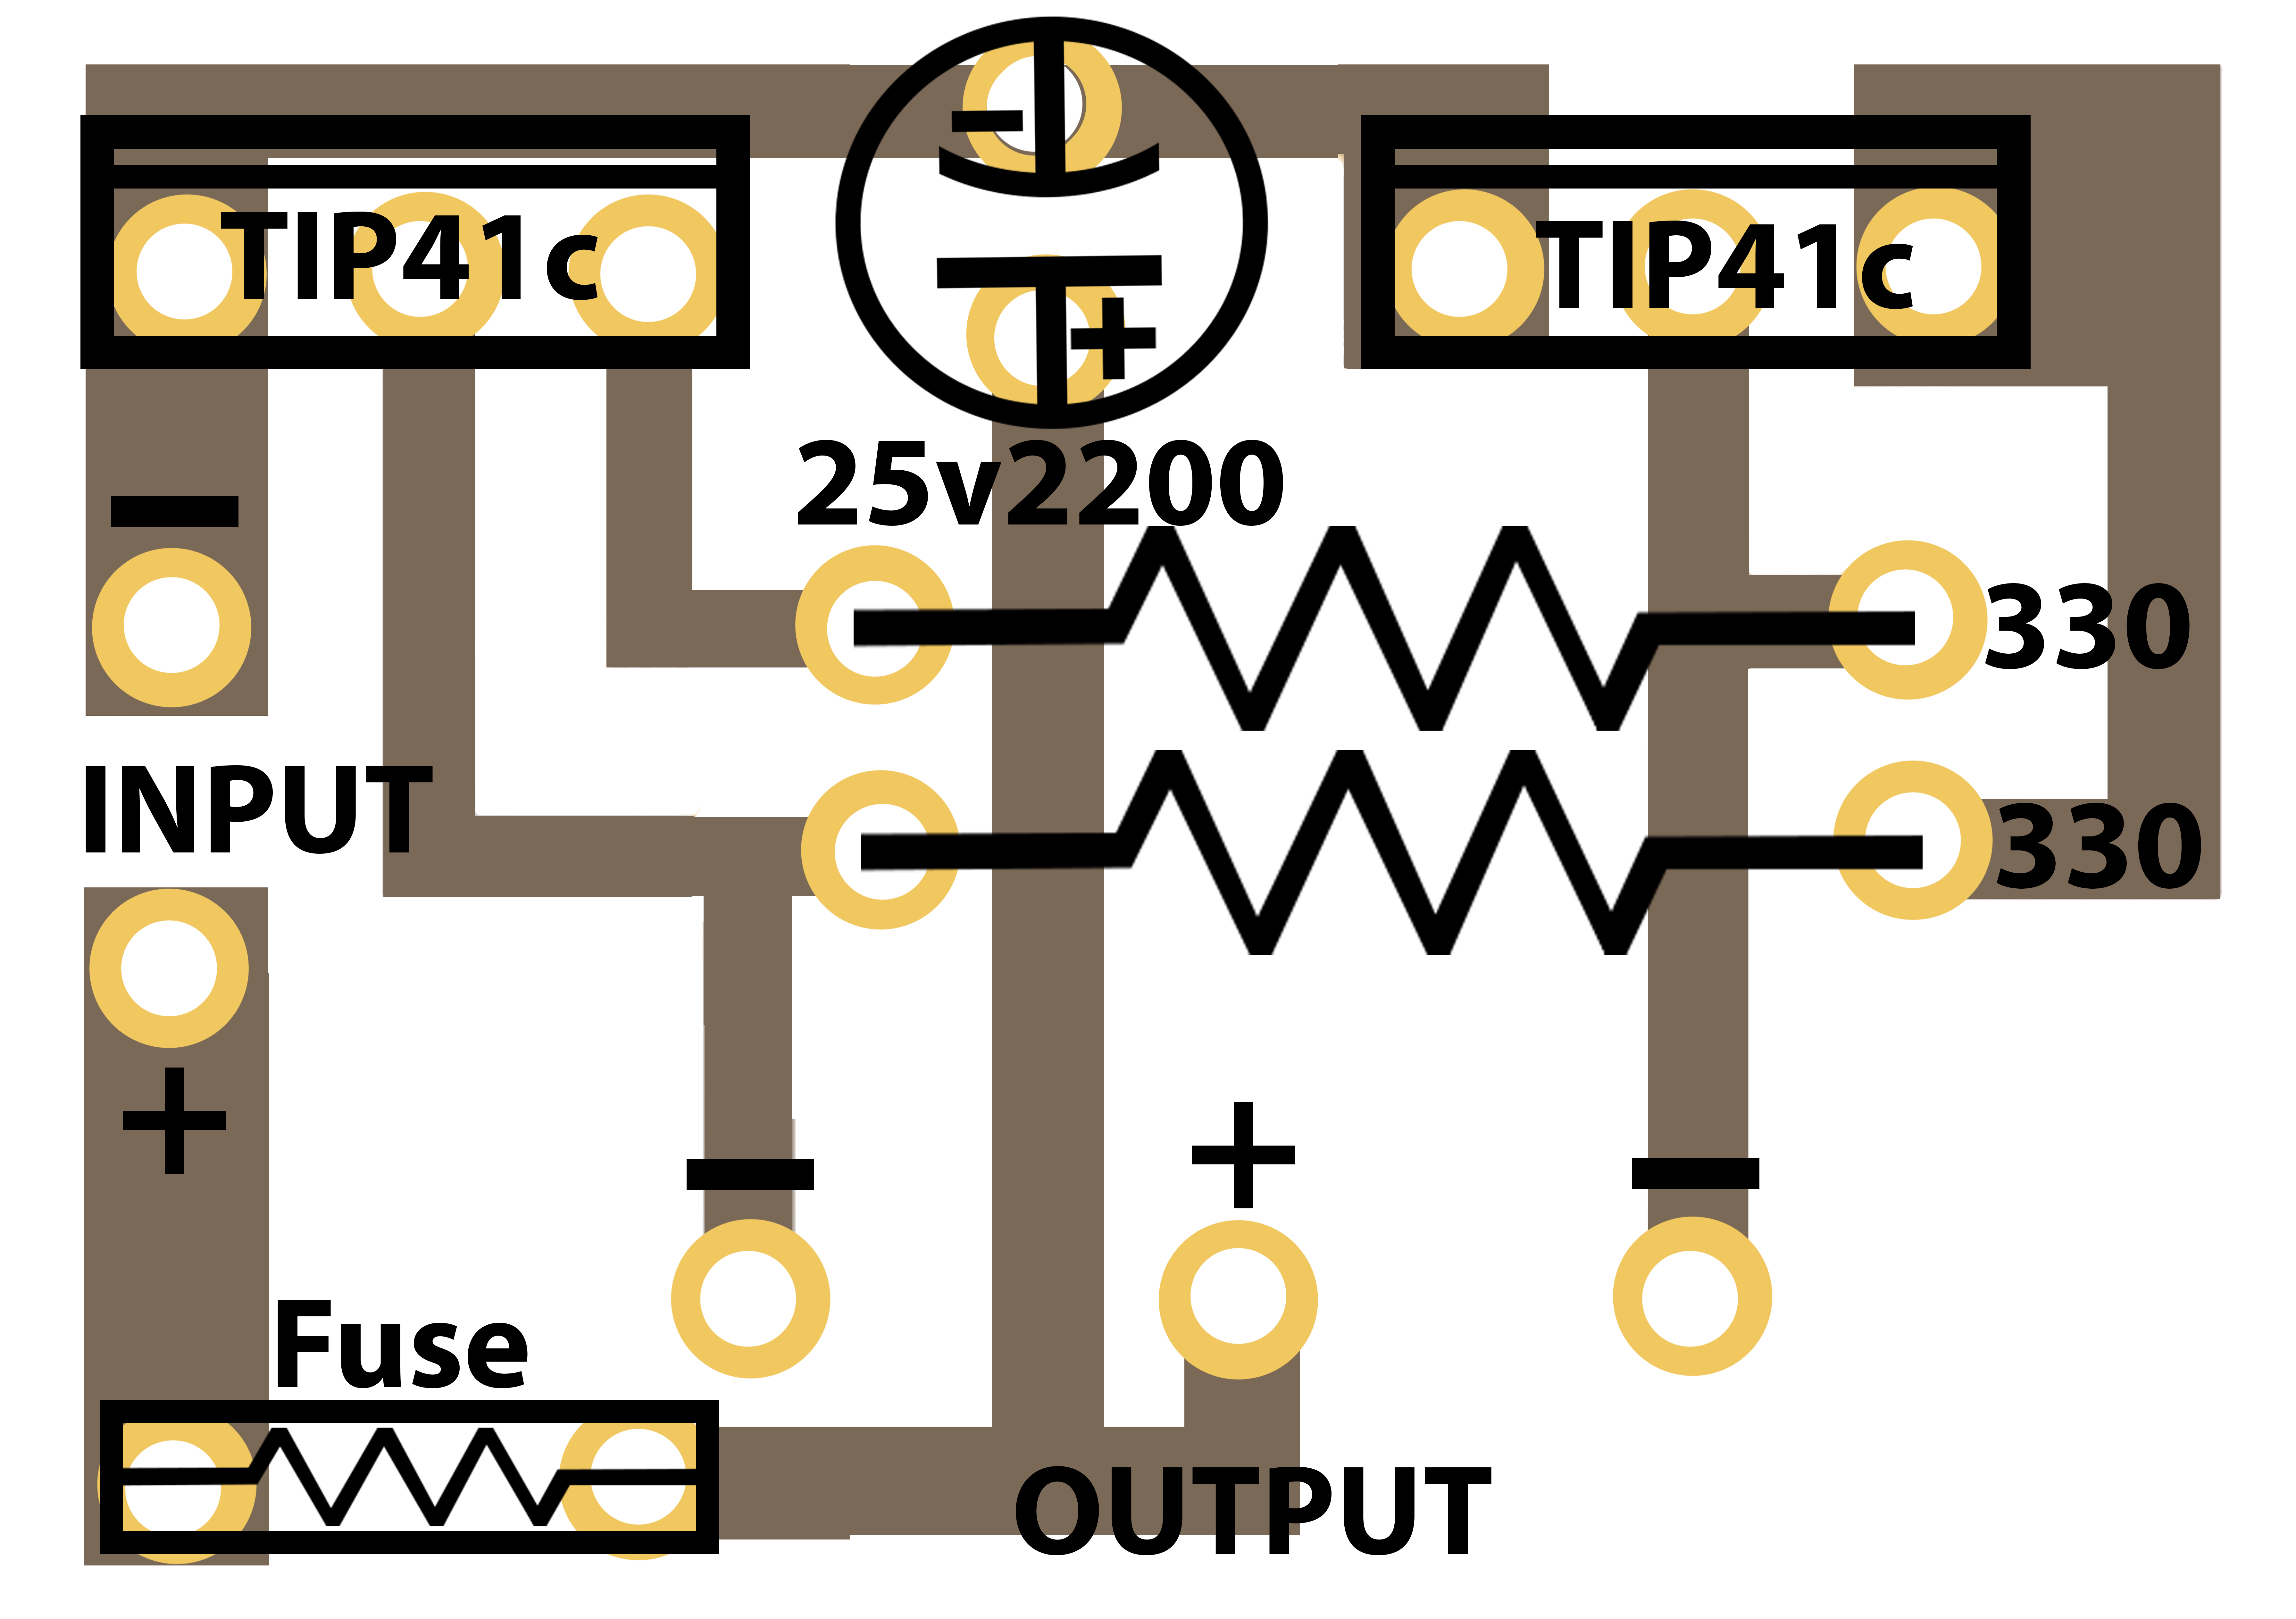 12V to 220V Inverter Circuit Diagram